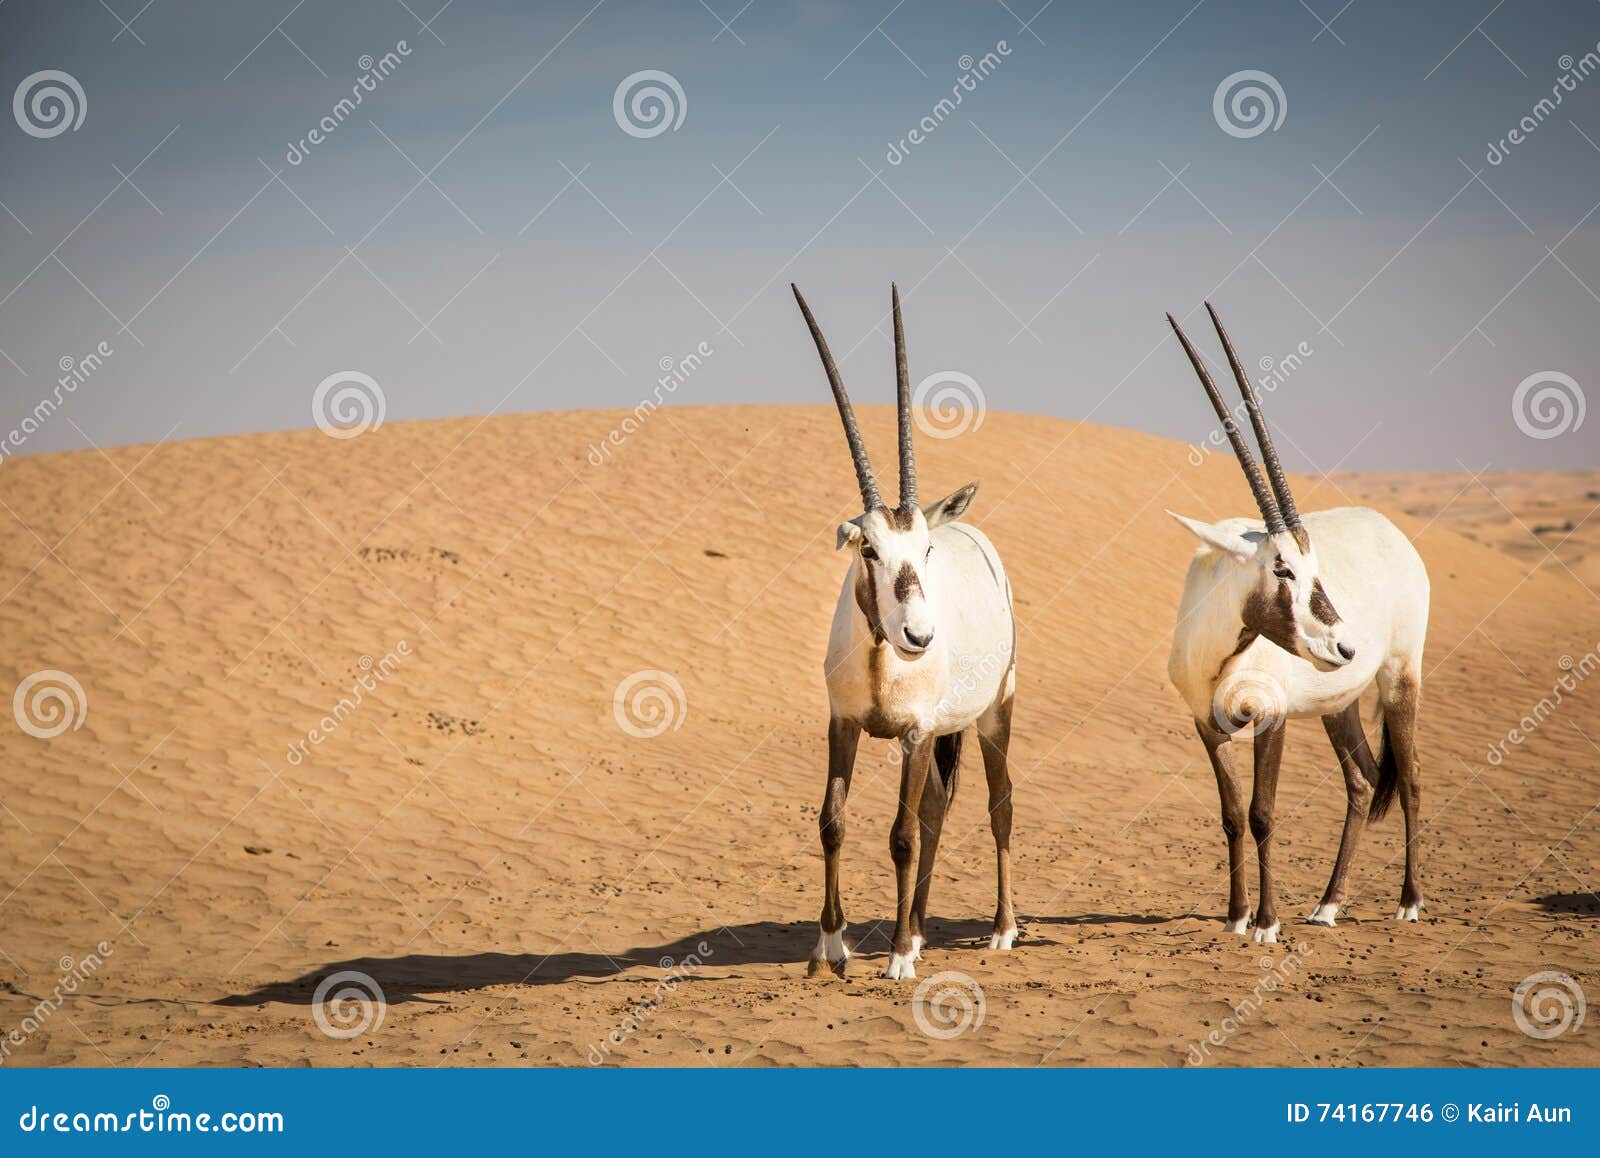 Arabian oryx stock photo. Image of east, solitude, species - 74167746